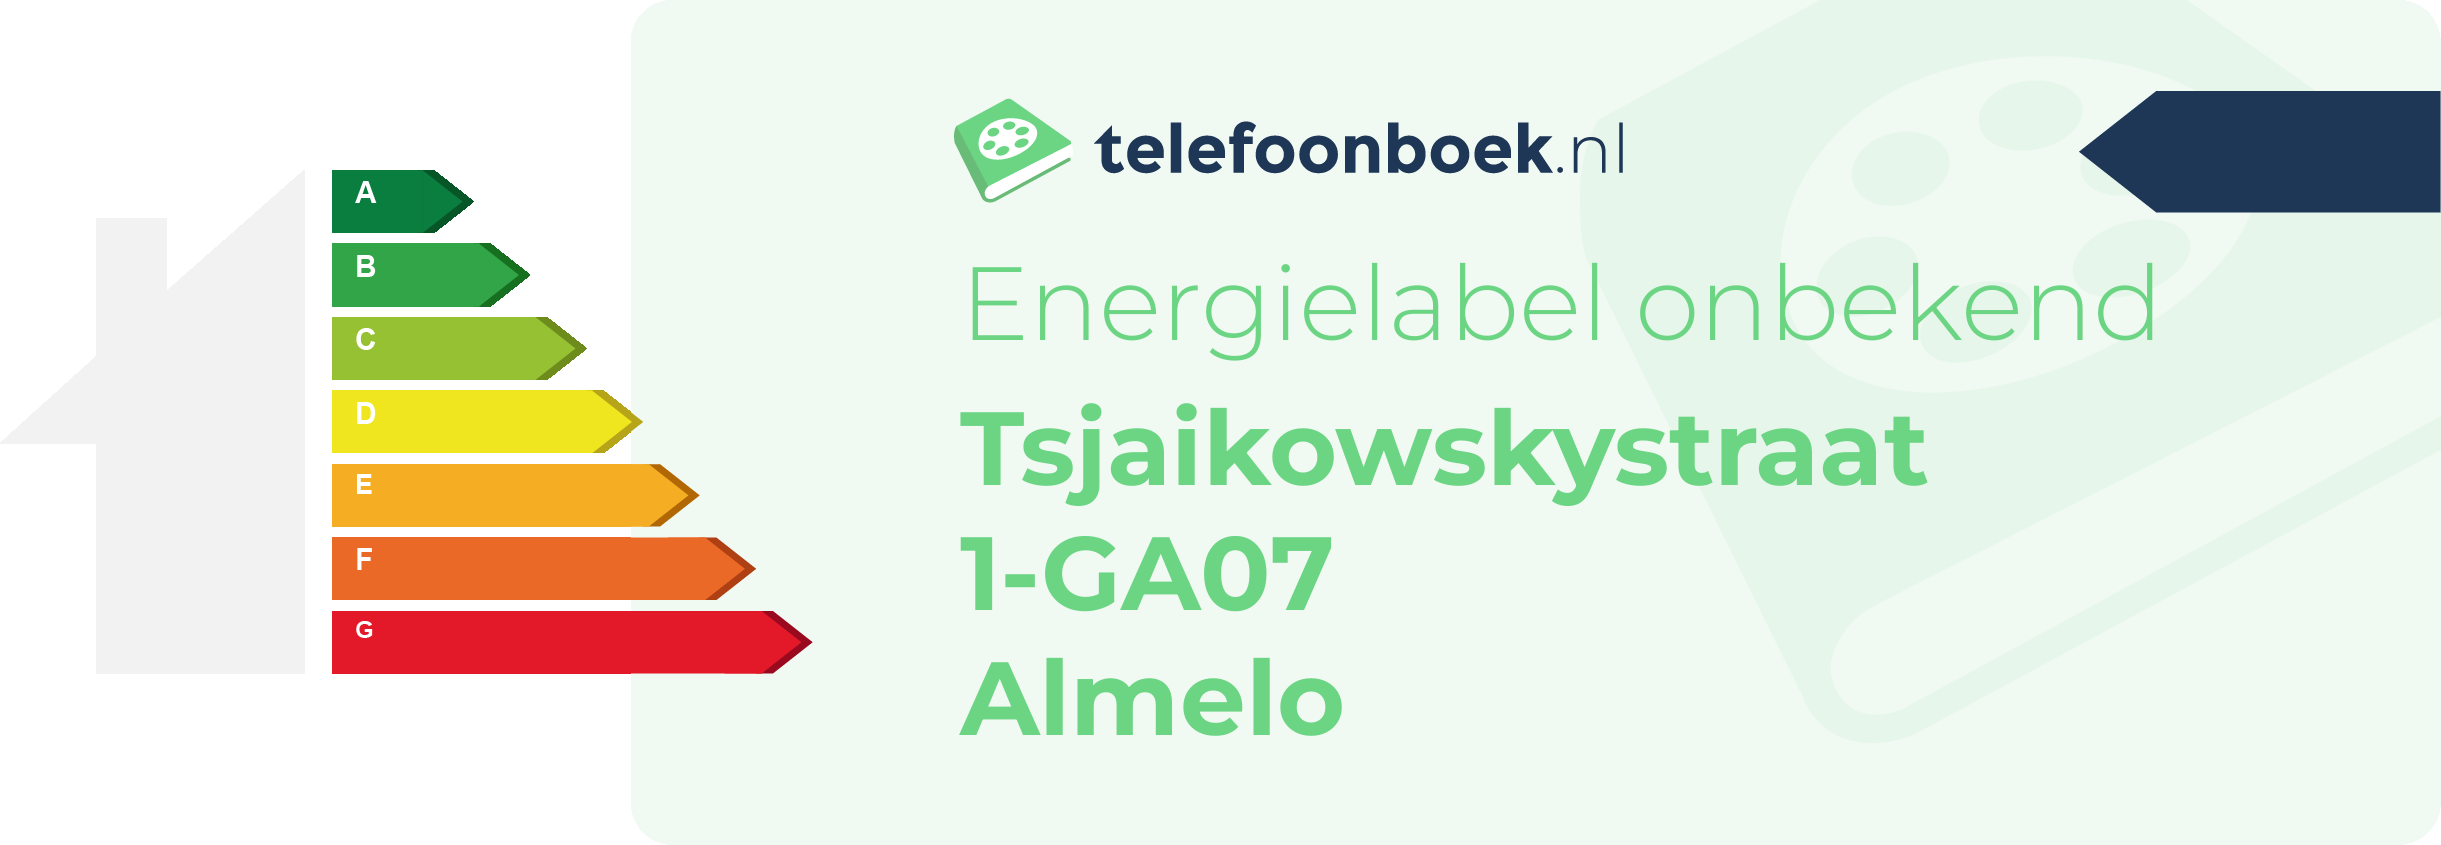 Energielabel Tsjaikowskystraat 1-GA07 Almelo